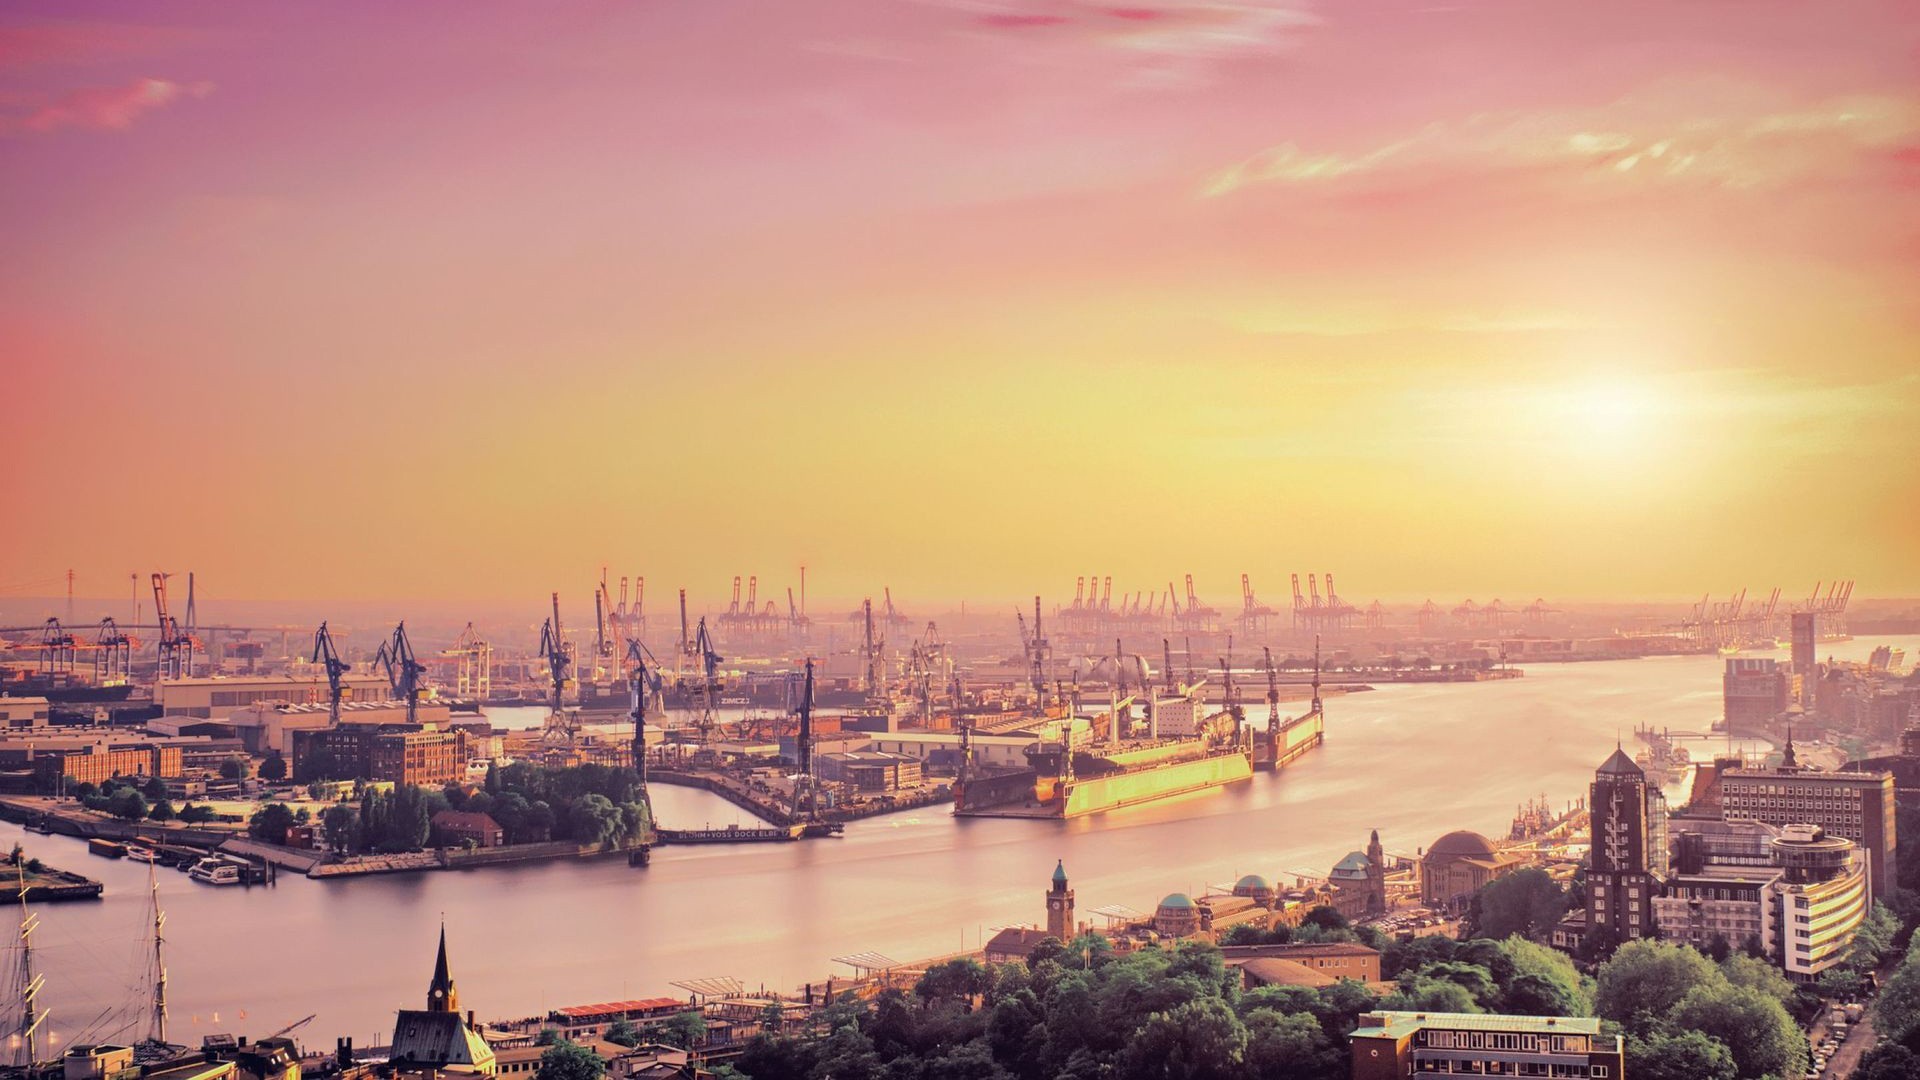 General 1920x1080 Hamburg cranes (machine) Germany sky cityscape ports sunlight